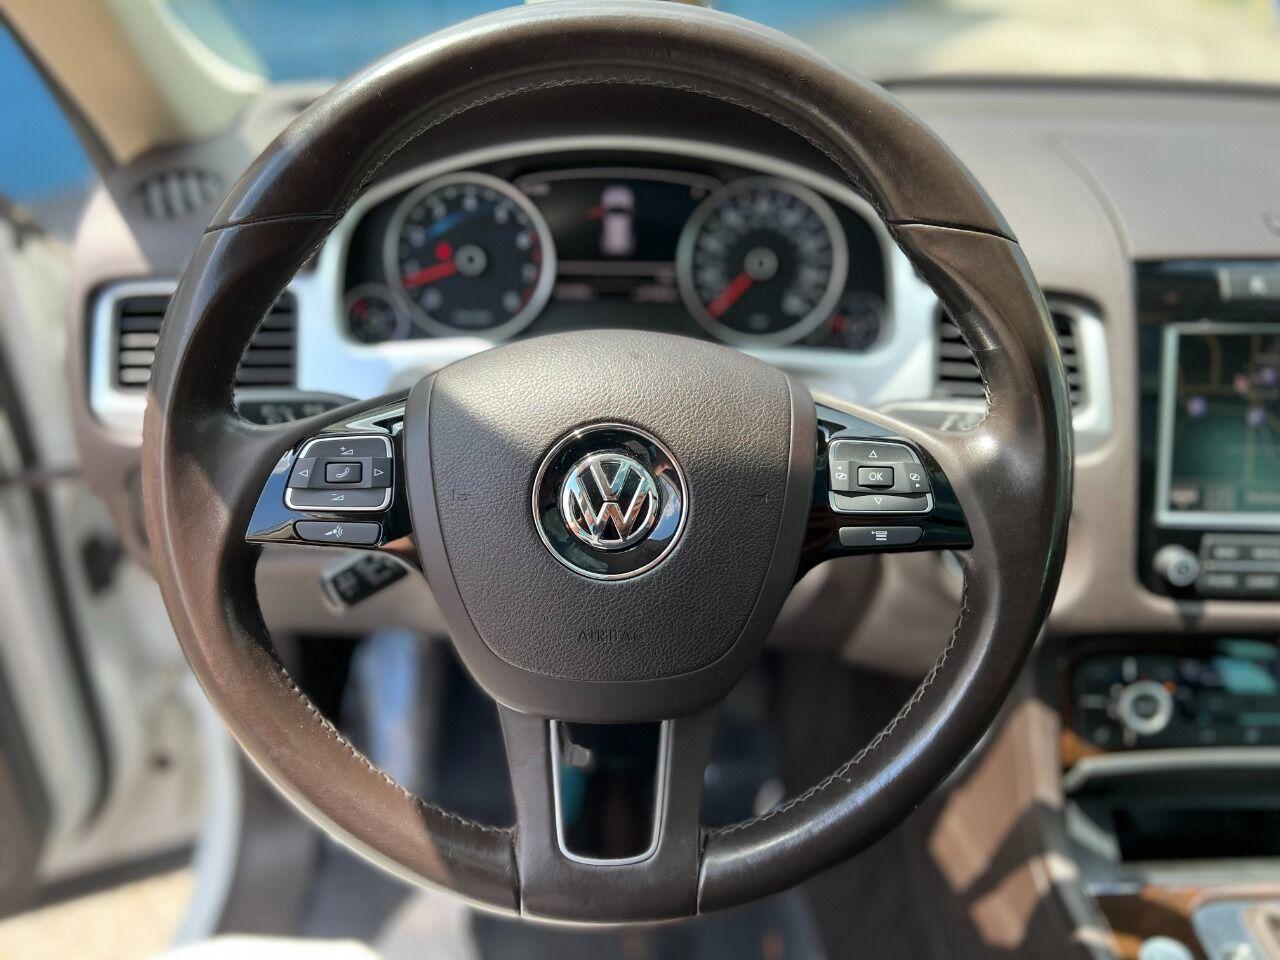 2014 Volkswagen Touareg V6 Executive AWD 4dr SUV